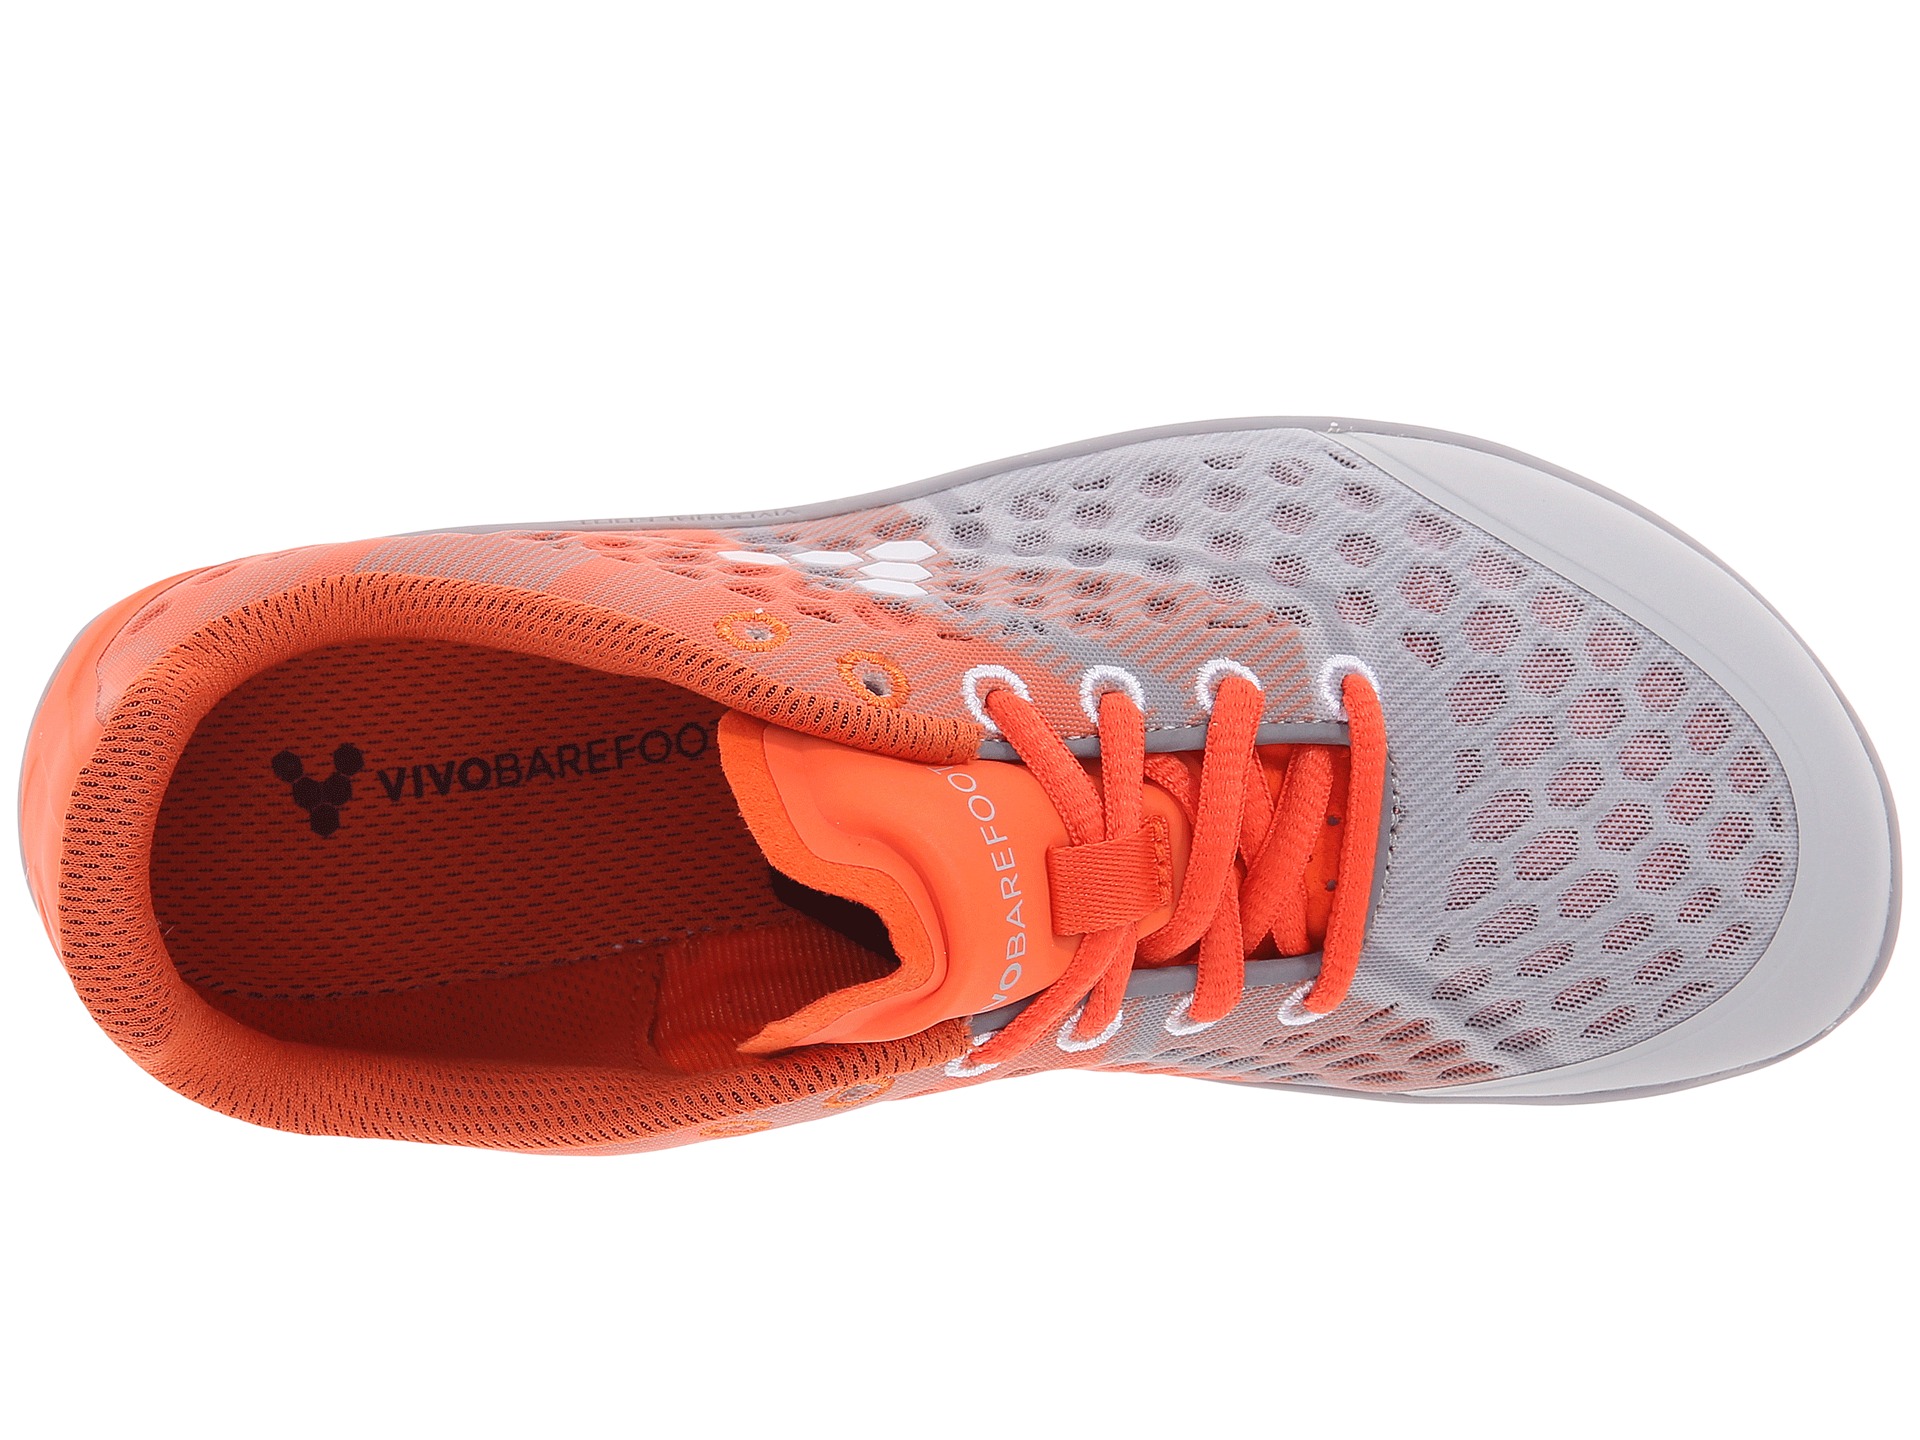 Vivobarefoot Stealth II Grey/Orange - Zappos.com Free Shipping BOTH Ways